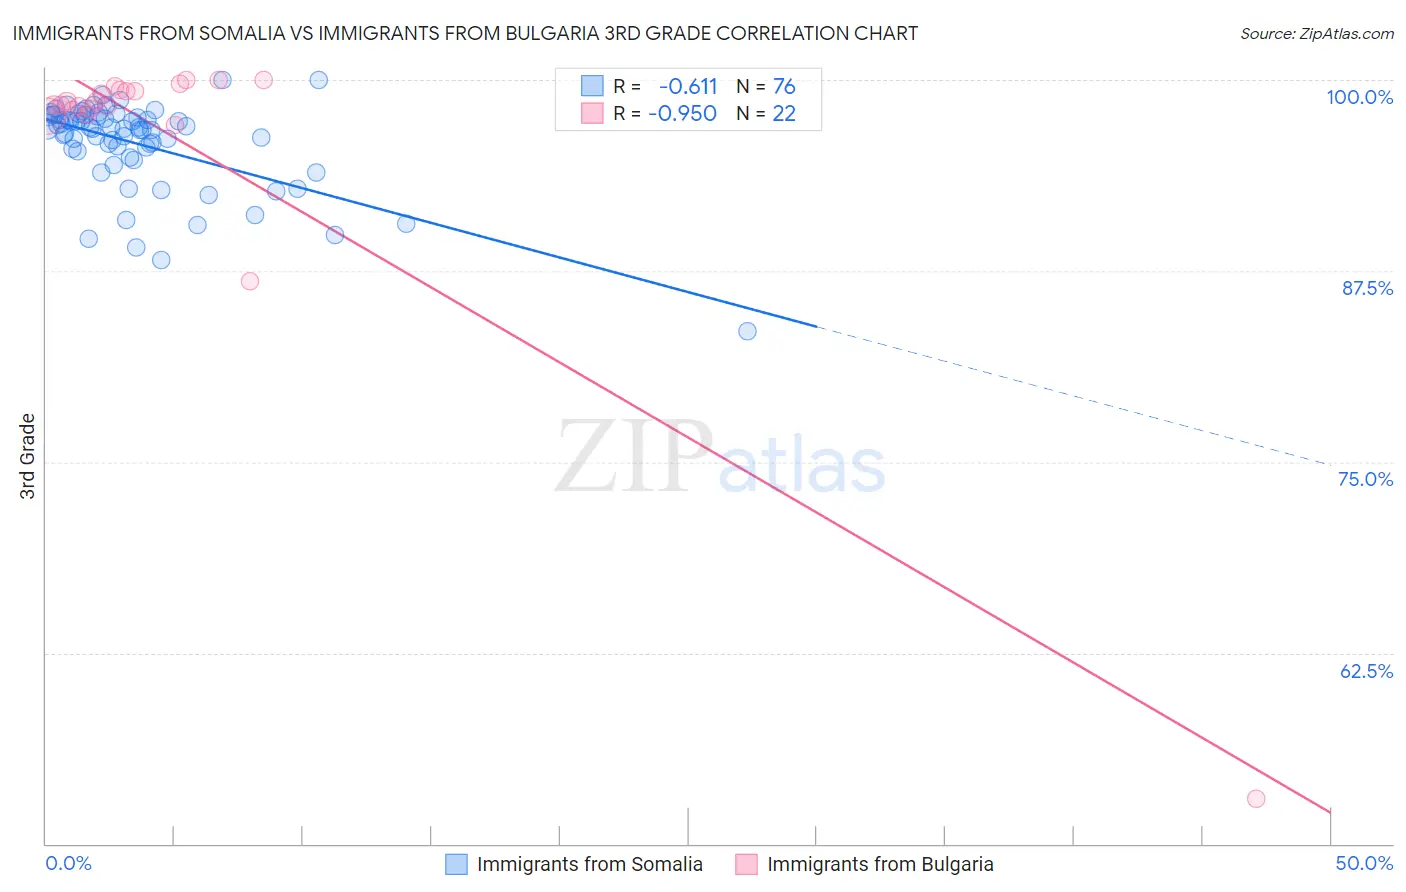 Immigrants from Somalia vs Immigrants from Bulgaria 3rd Grade